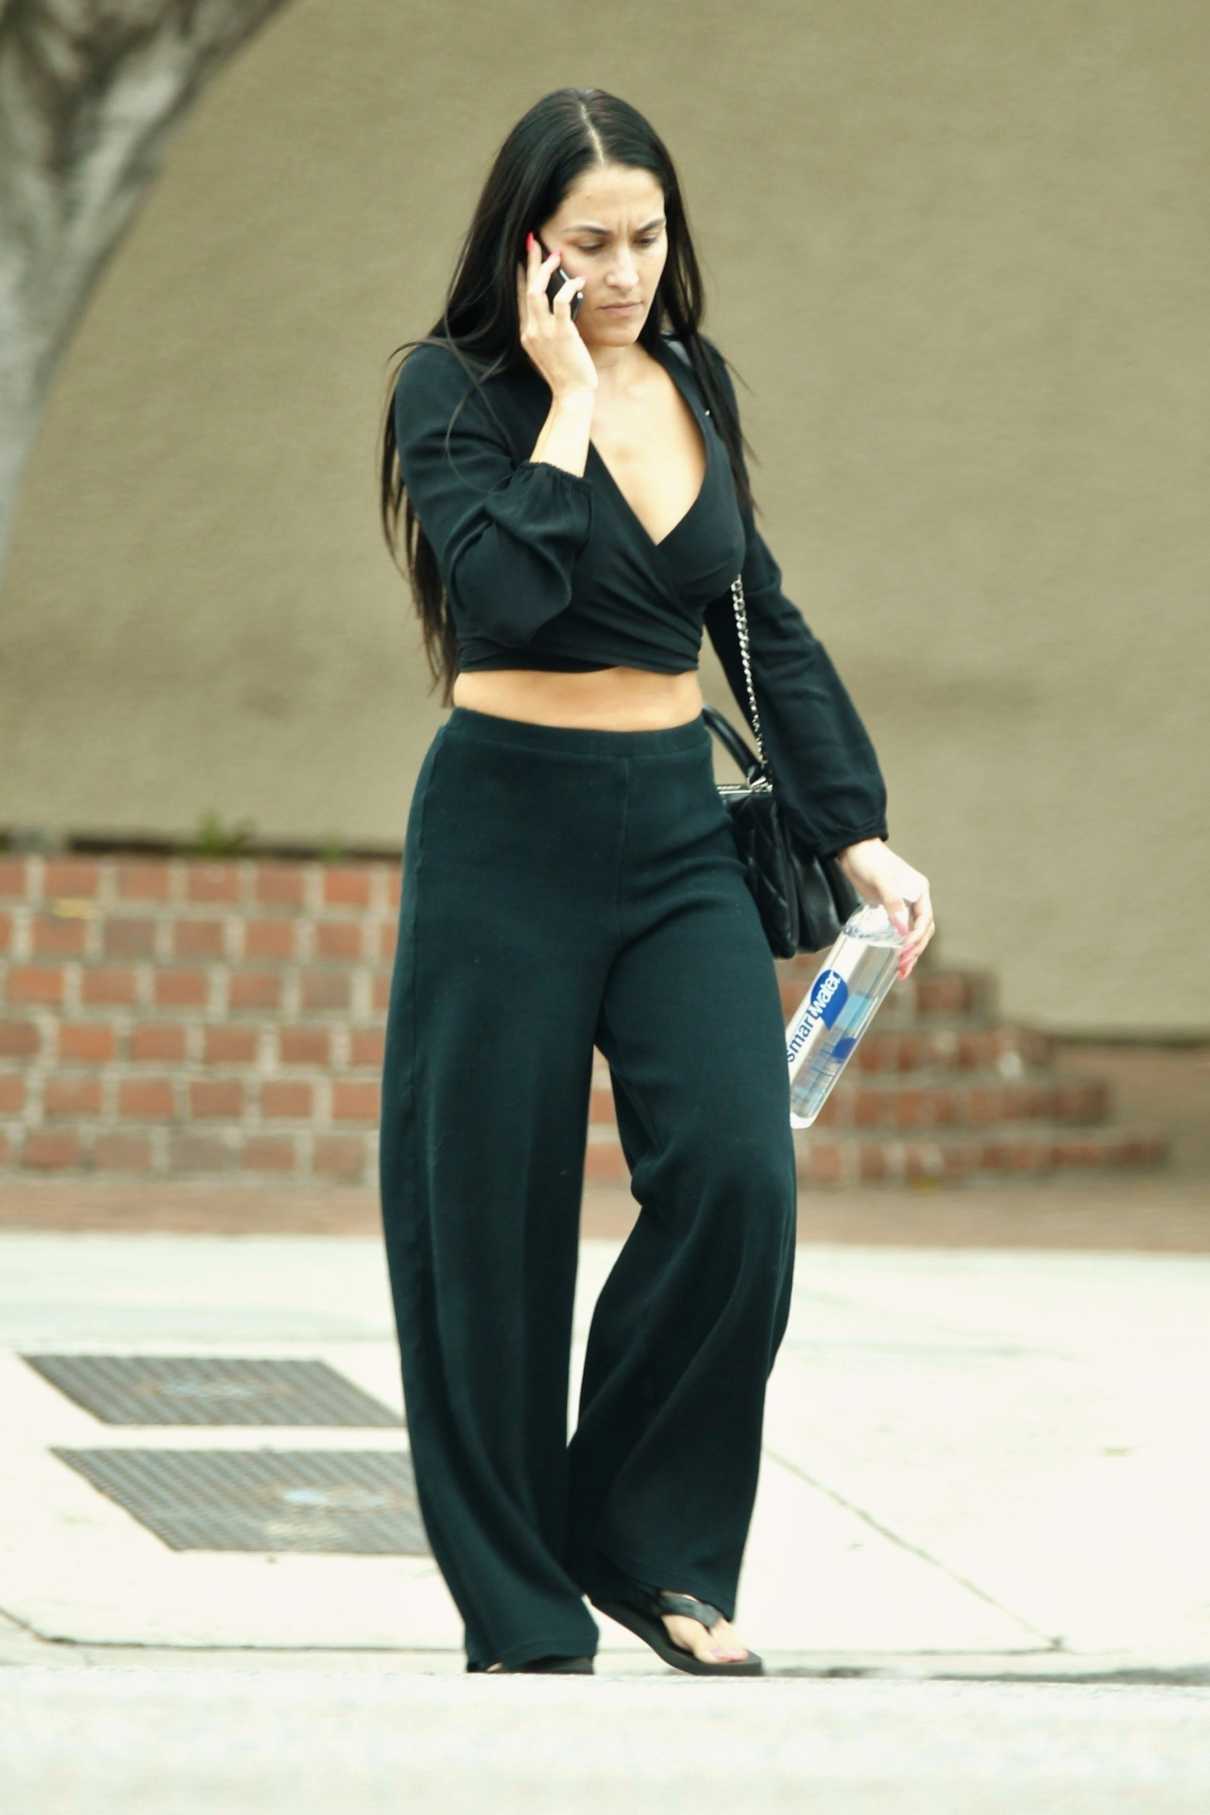 Nikki Bella in a Black Pants